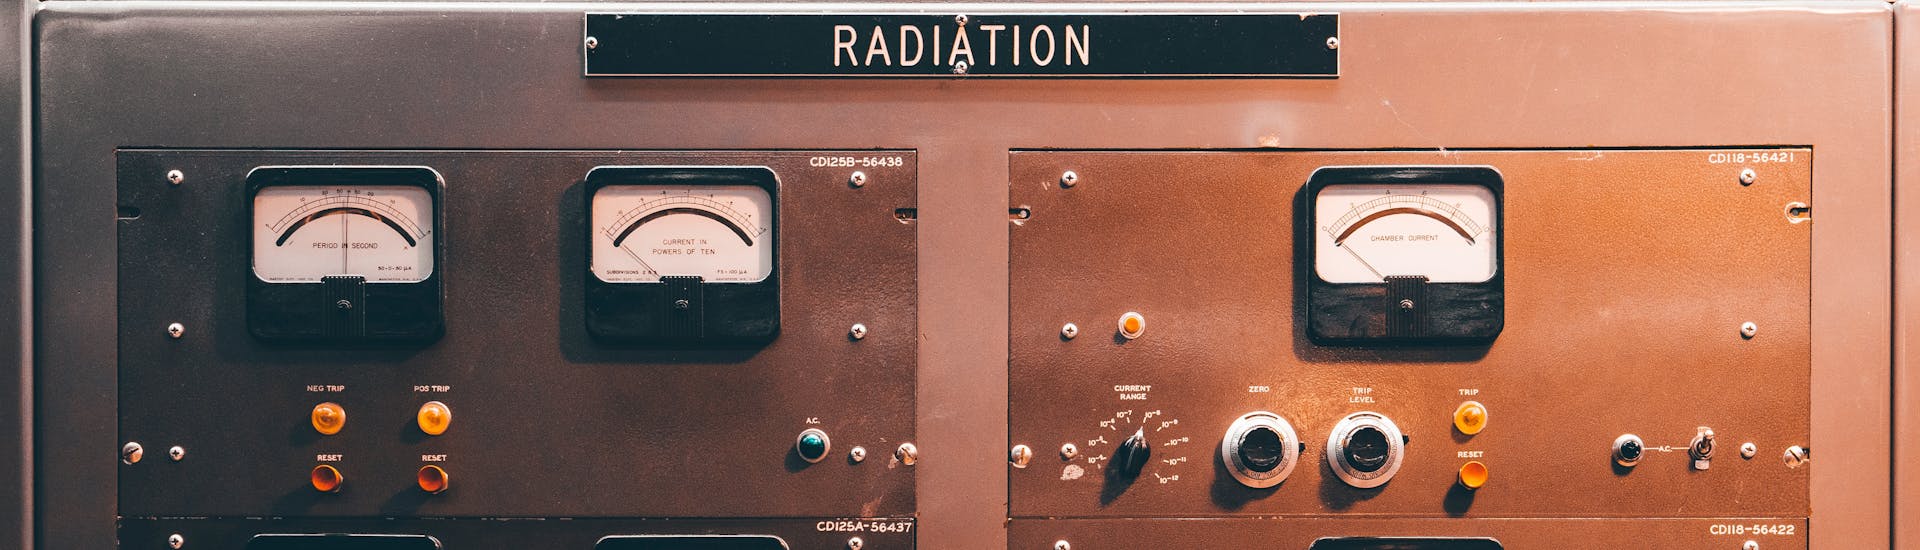 radiation gauges inside an uranium company